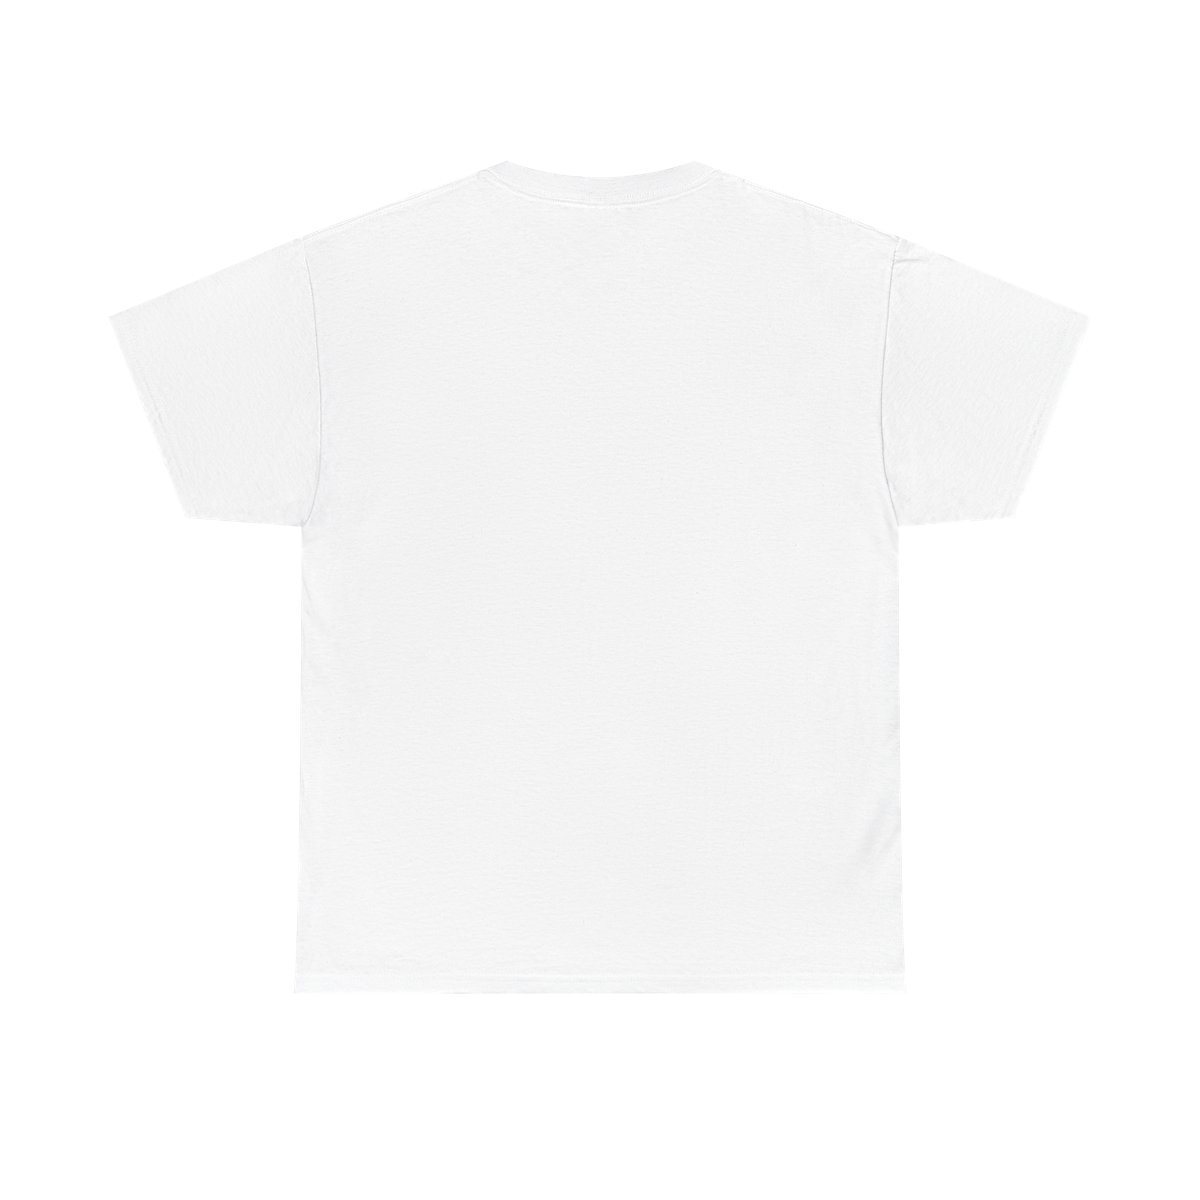 Goatscorge New Logo 2022 Red/White Short Sleeve Tshirt